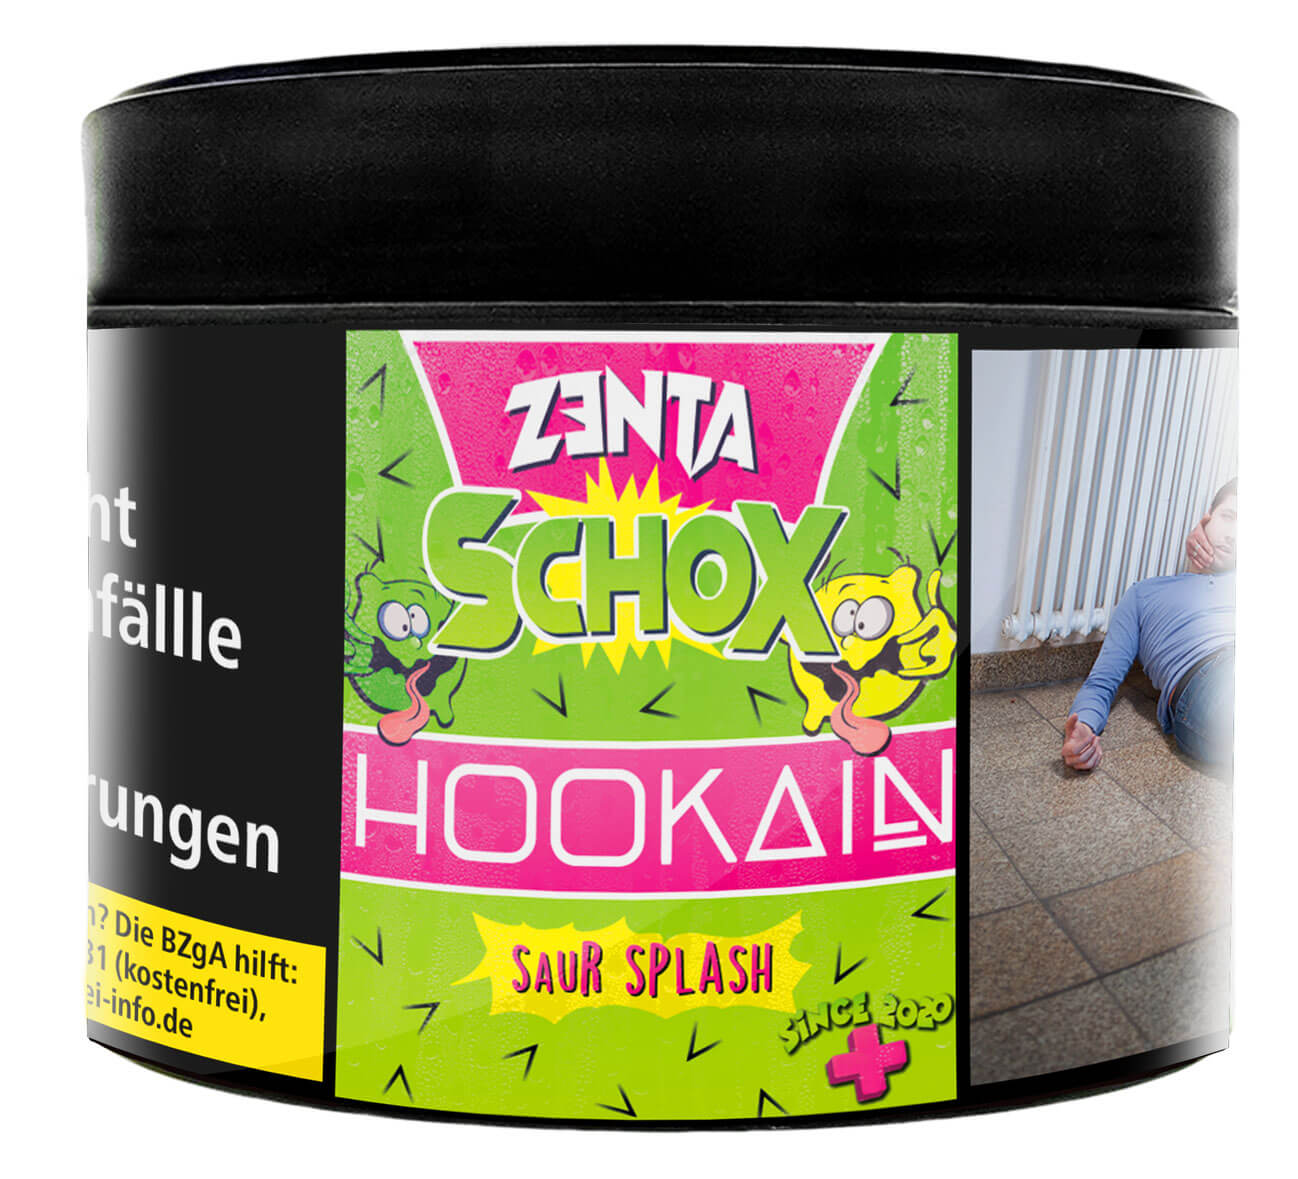 Hookain Tabak Zenta Schox Saur Splash 200g